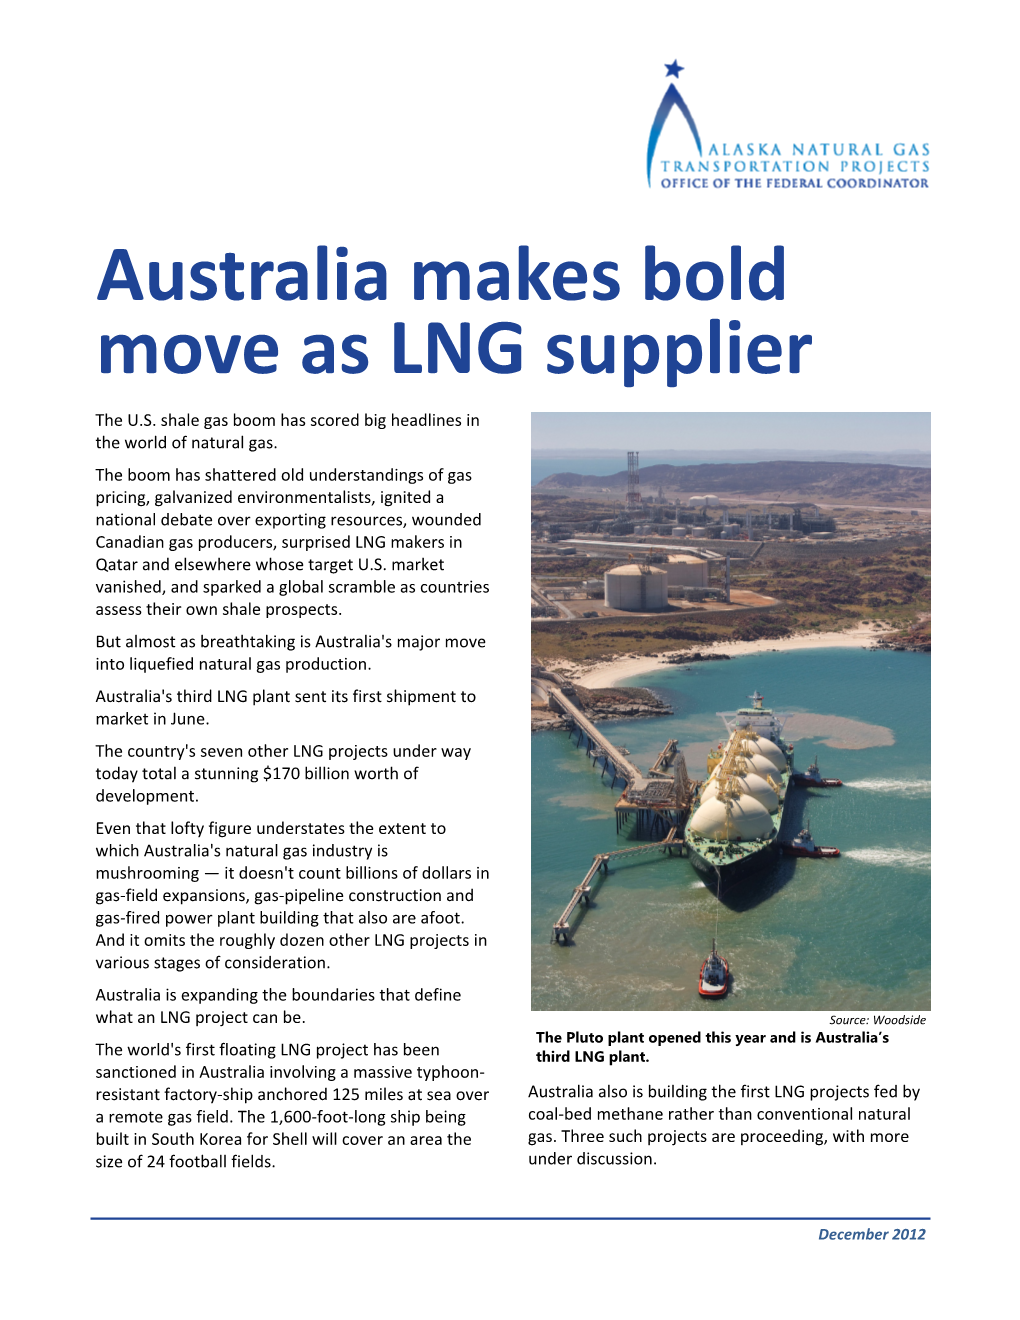 Australia Makes Bold Move As LNG Supplier